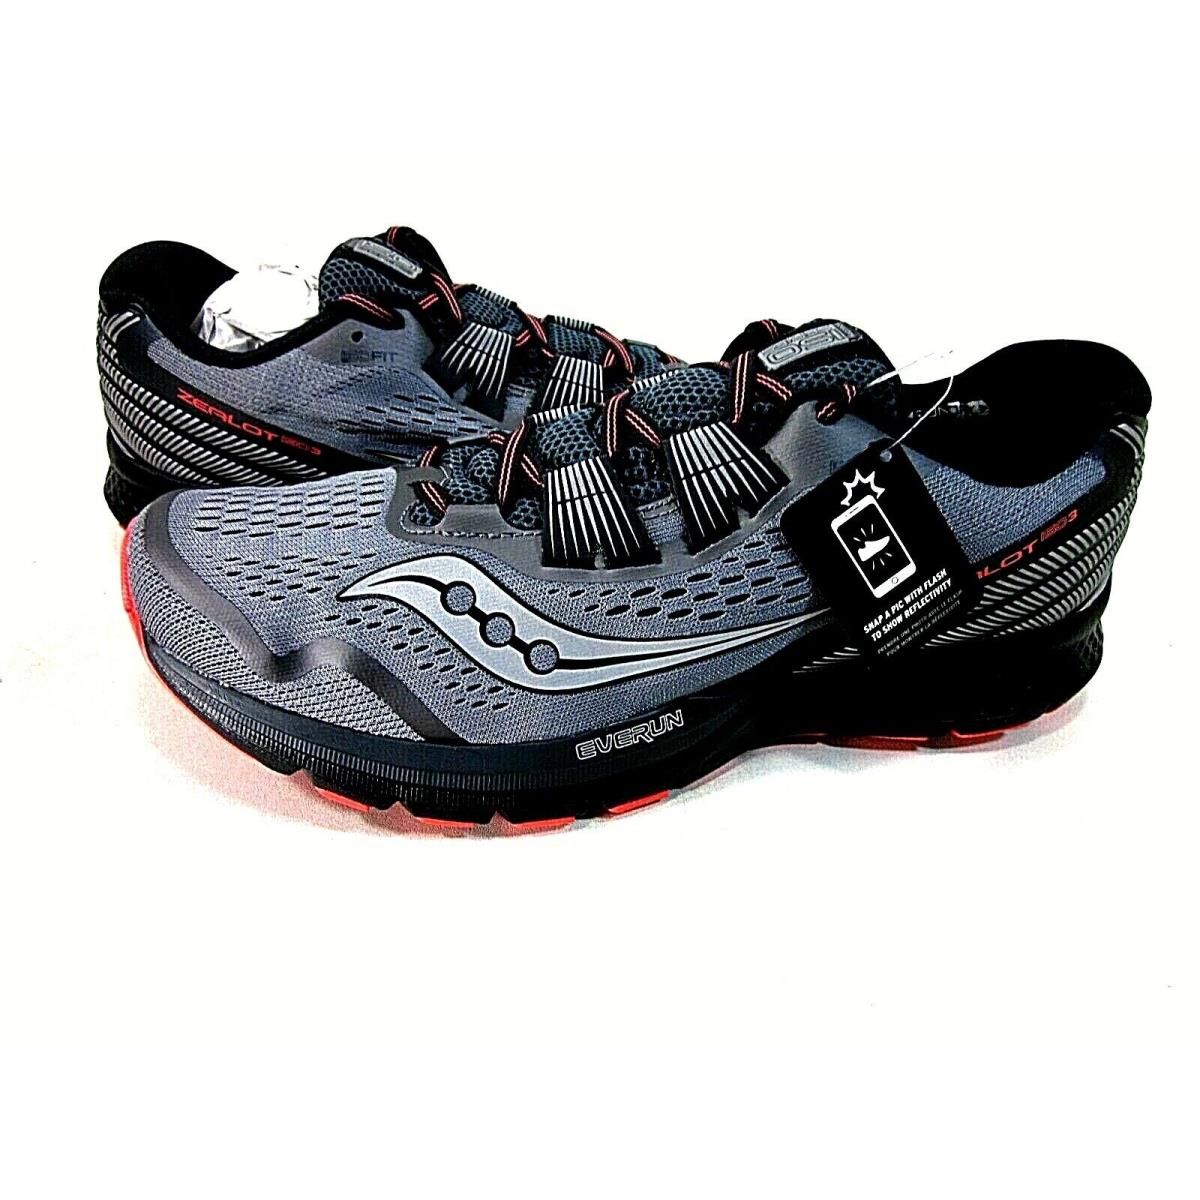 Saucony Zealot Iso 3 Reflex Grey/black/coral Women`s Running Shoes US Size 5